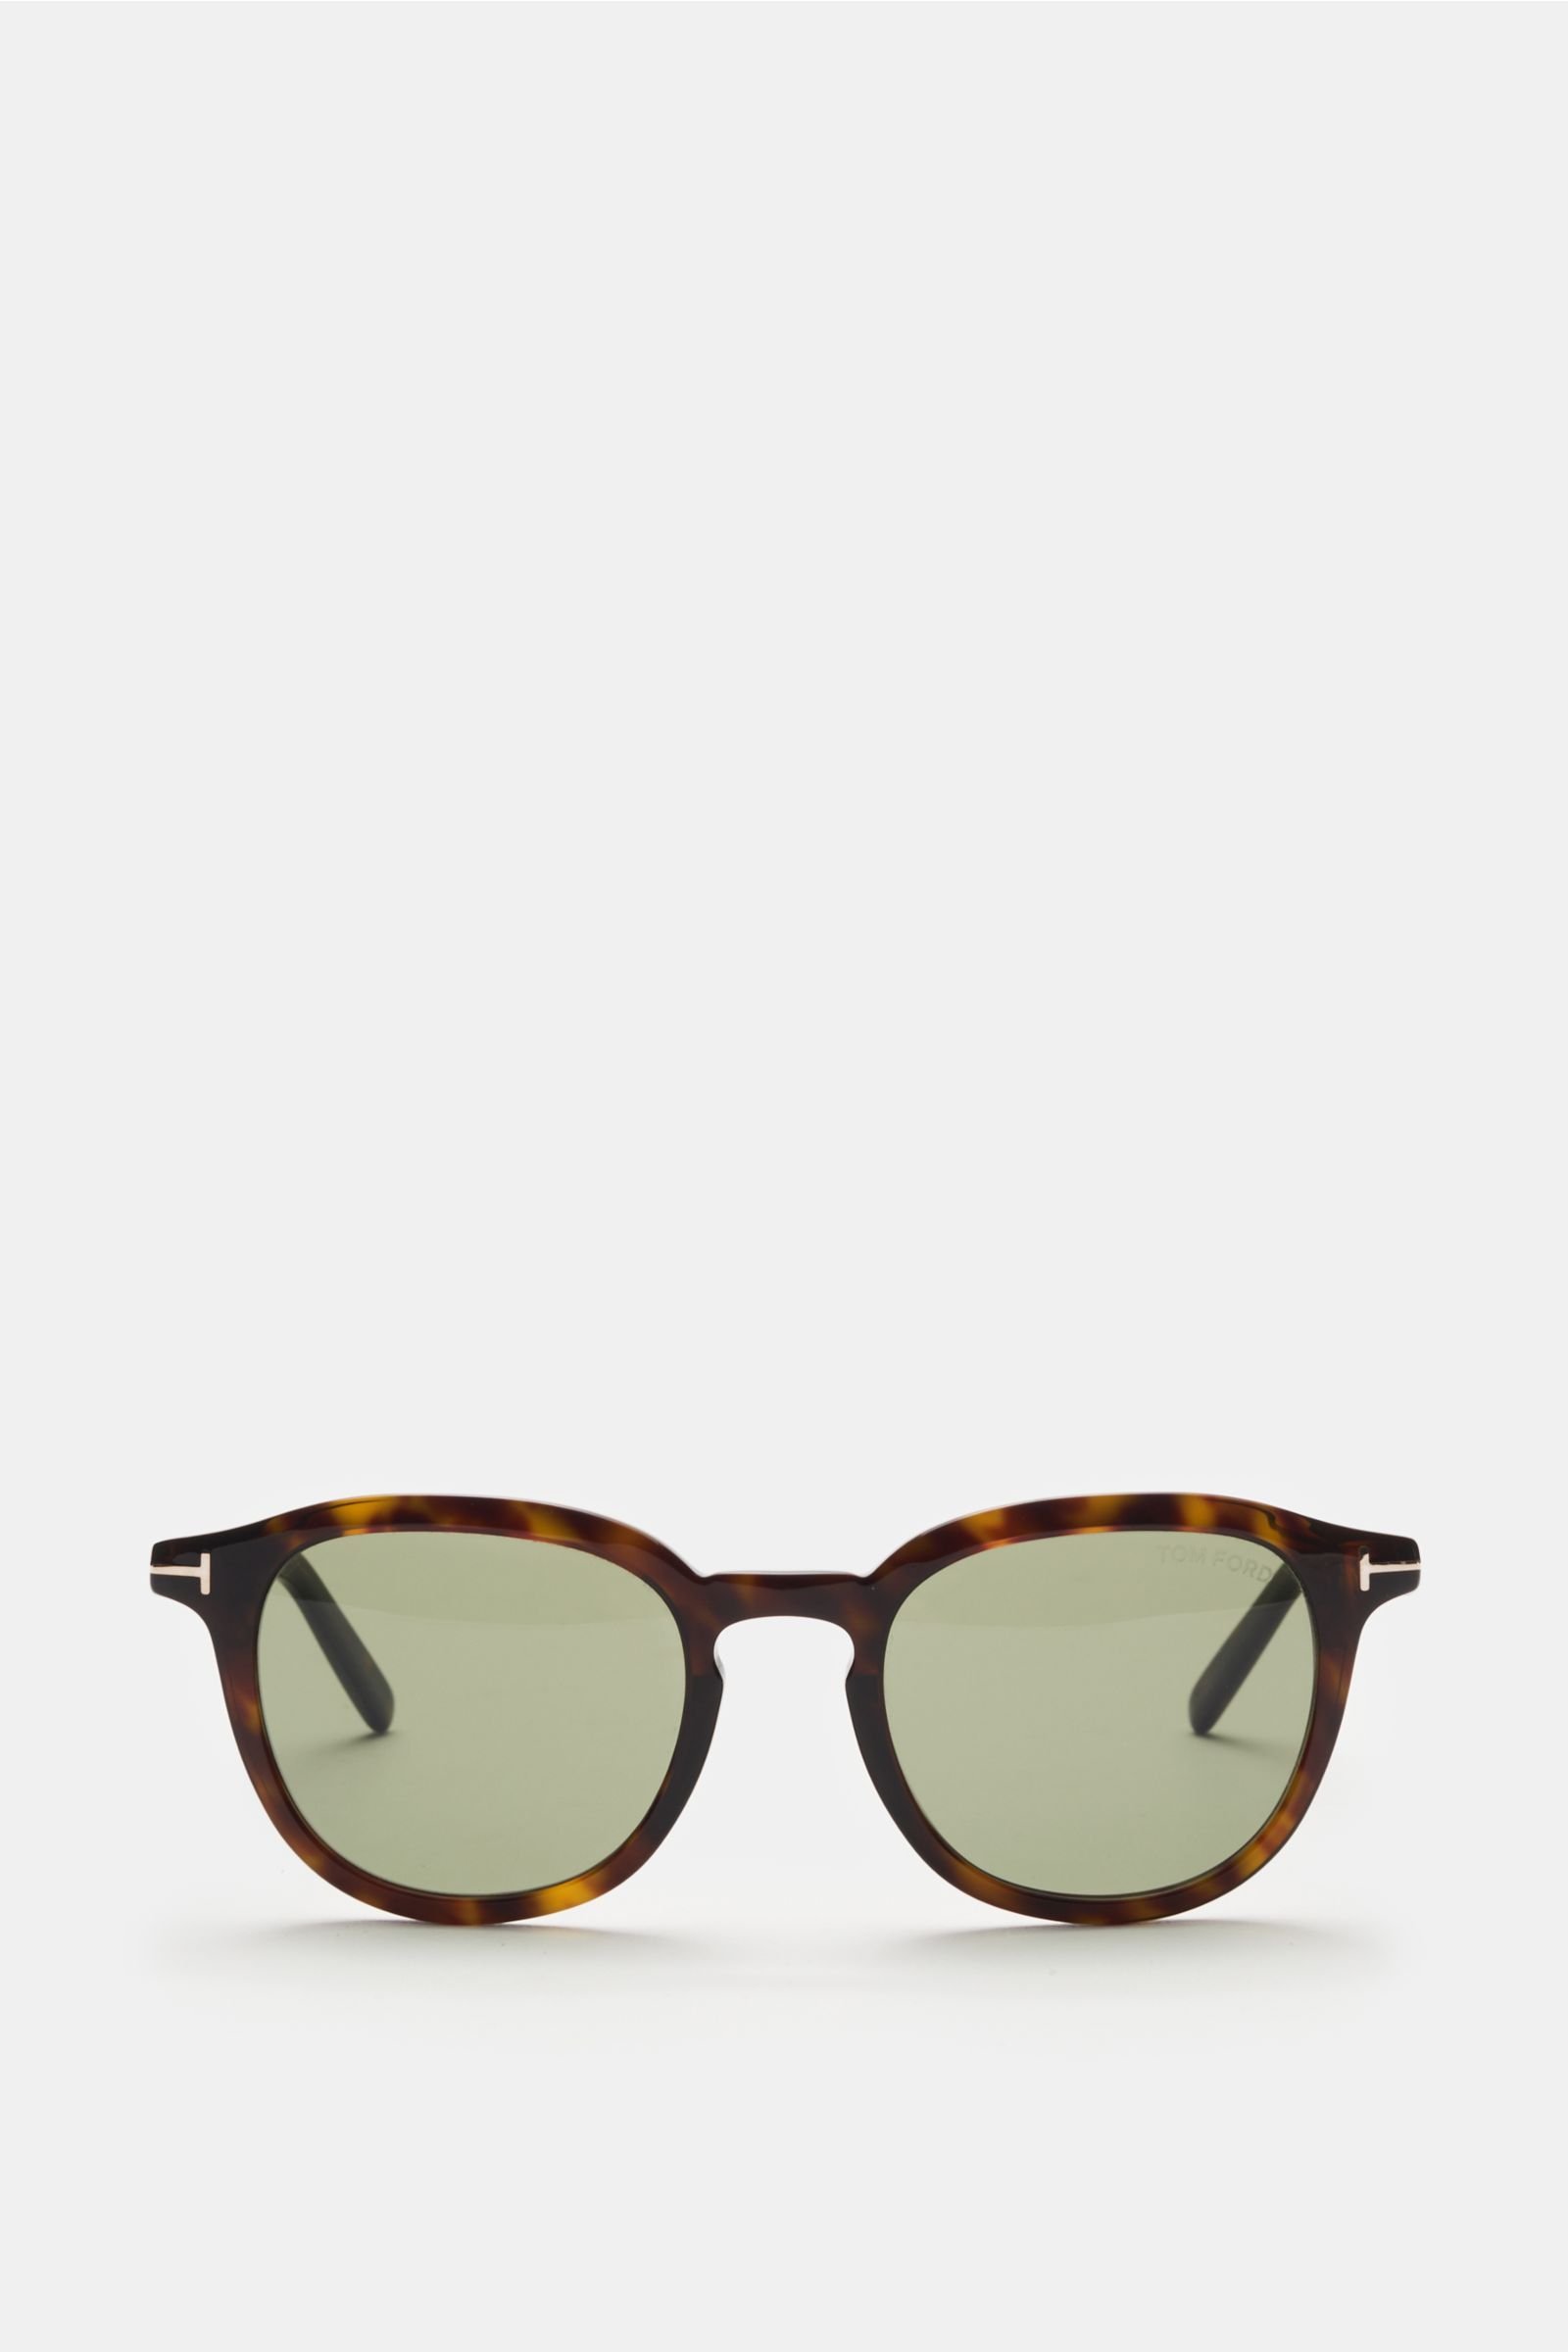 Sunglasses 'Pax' dark brown/green 